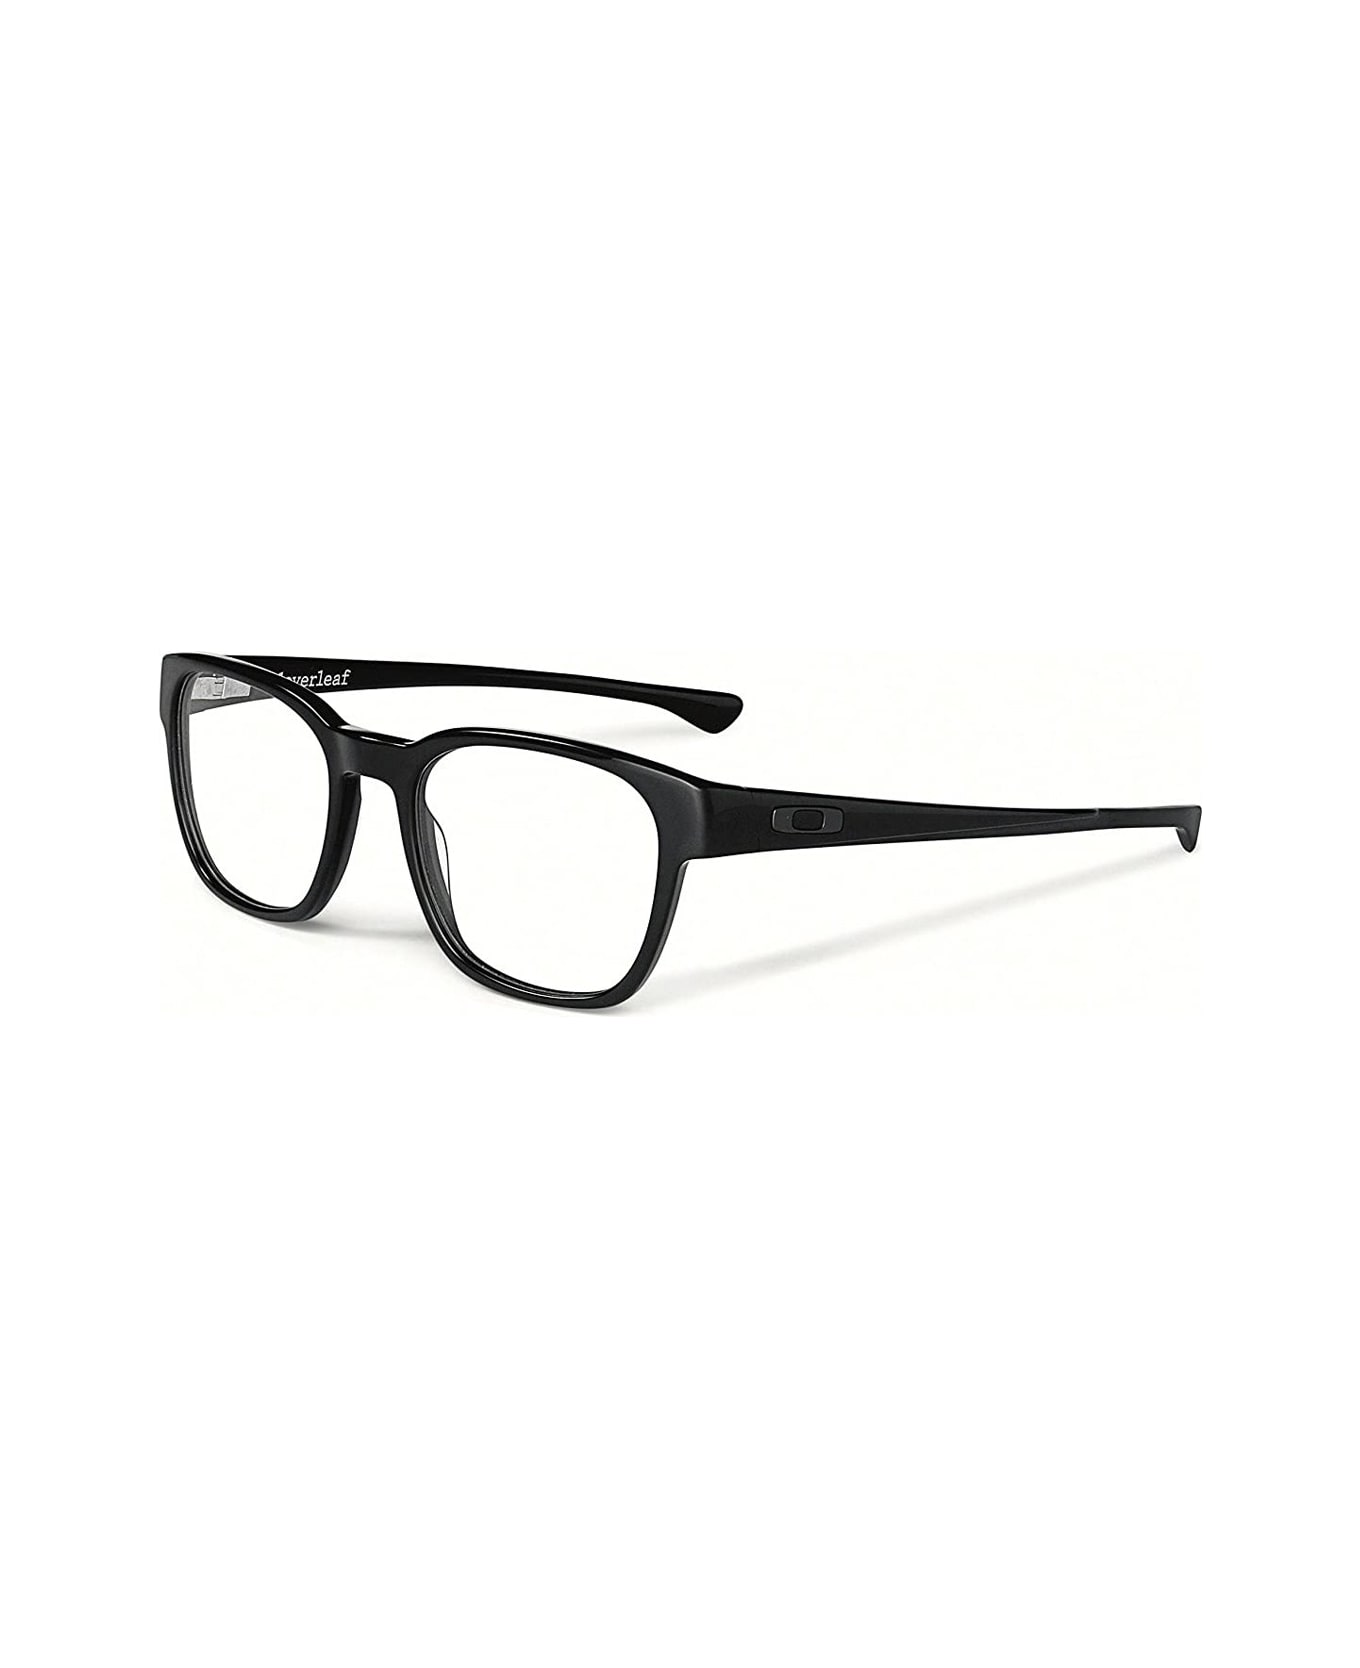 Oakley Cloverleaf Ox1078 Glasses - Nero